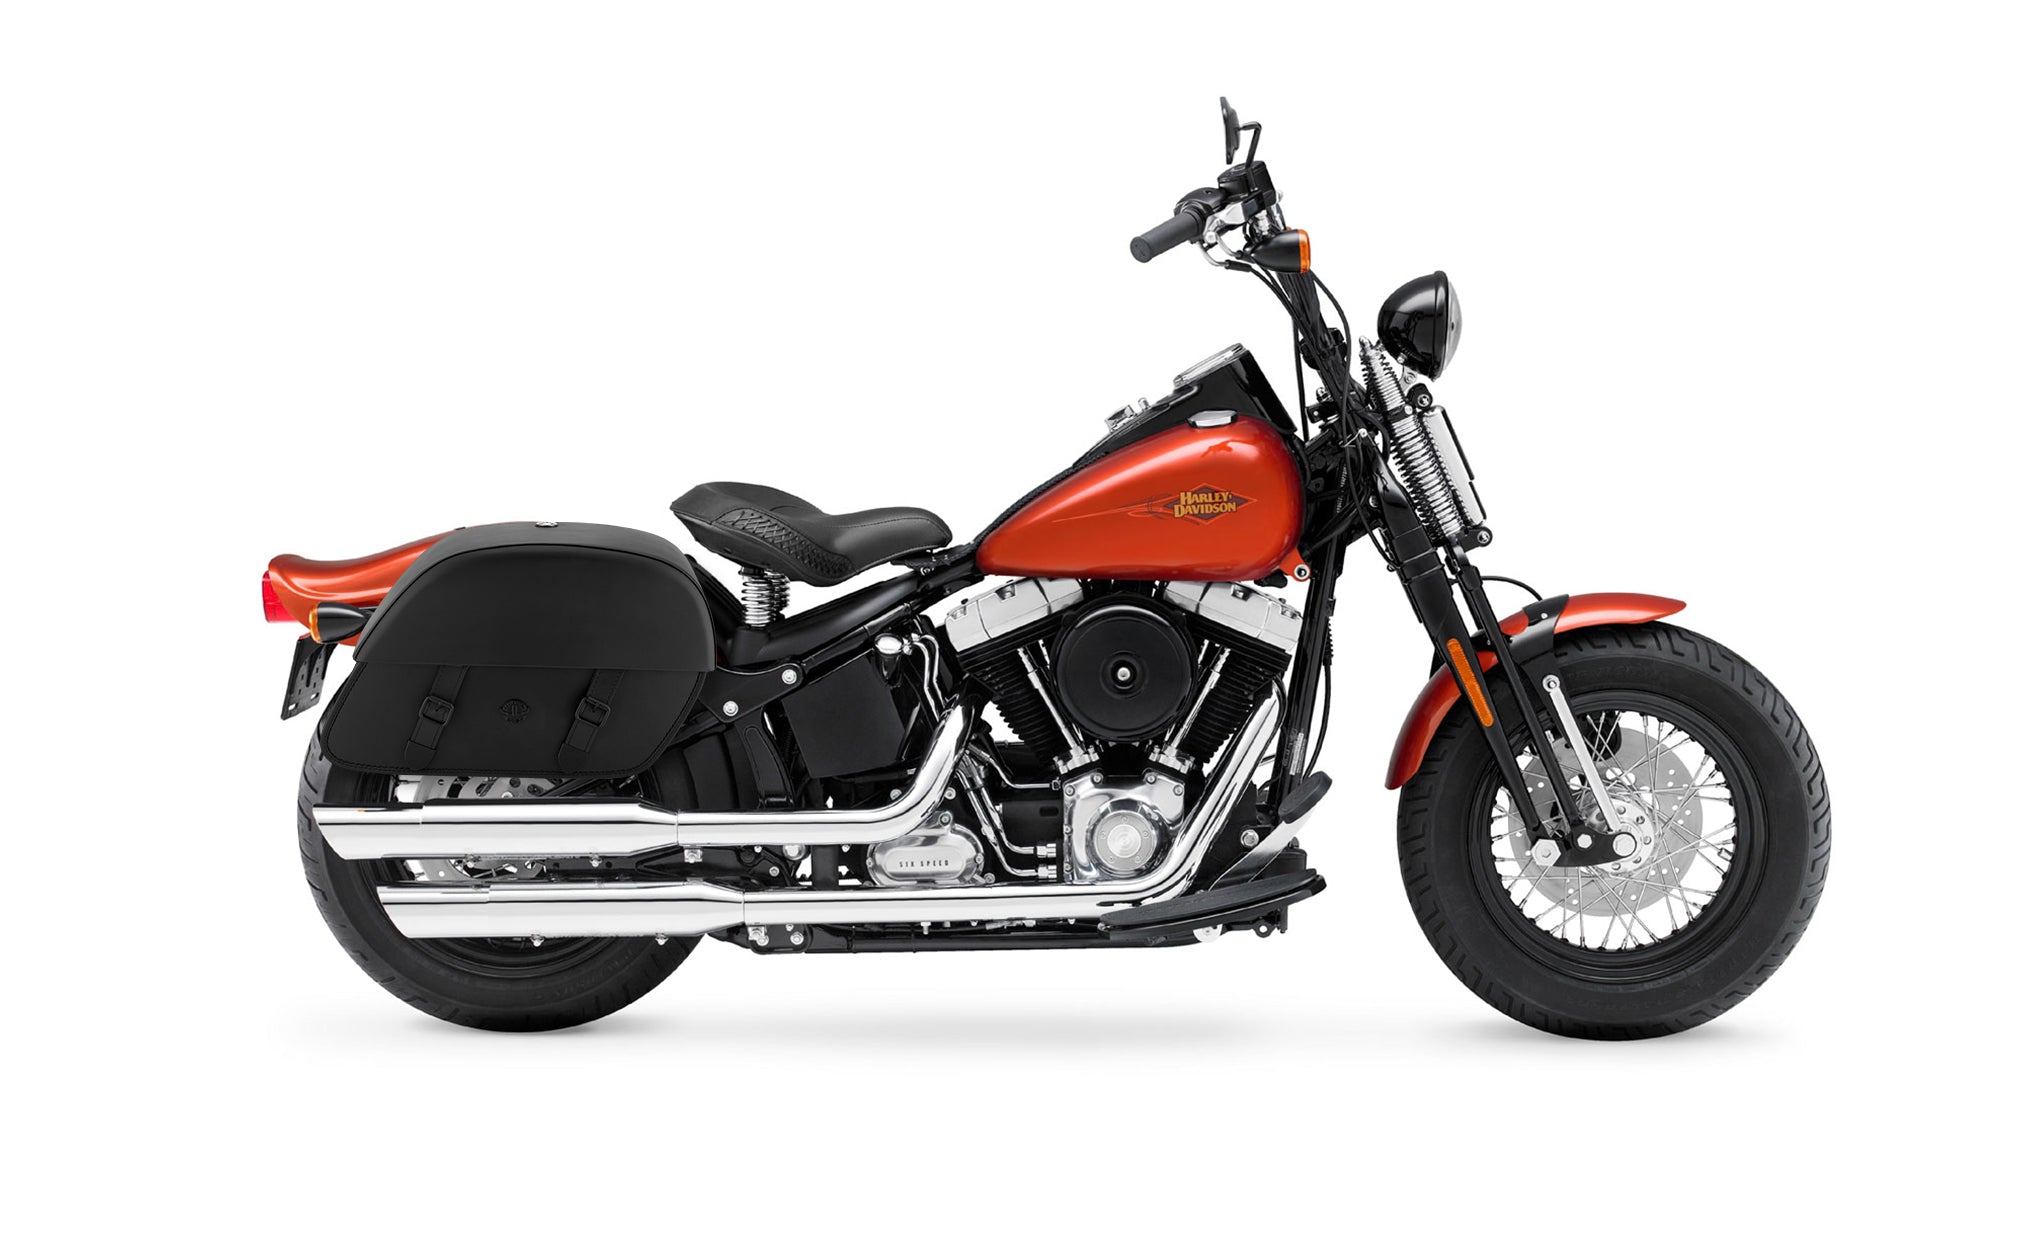 Viking Baelor Large Leather Motorcycle Saddlebags For Harley Davidson Softail Cross Bones Flstsb on Bike Photo @expand